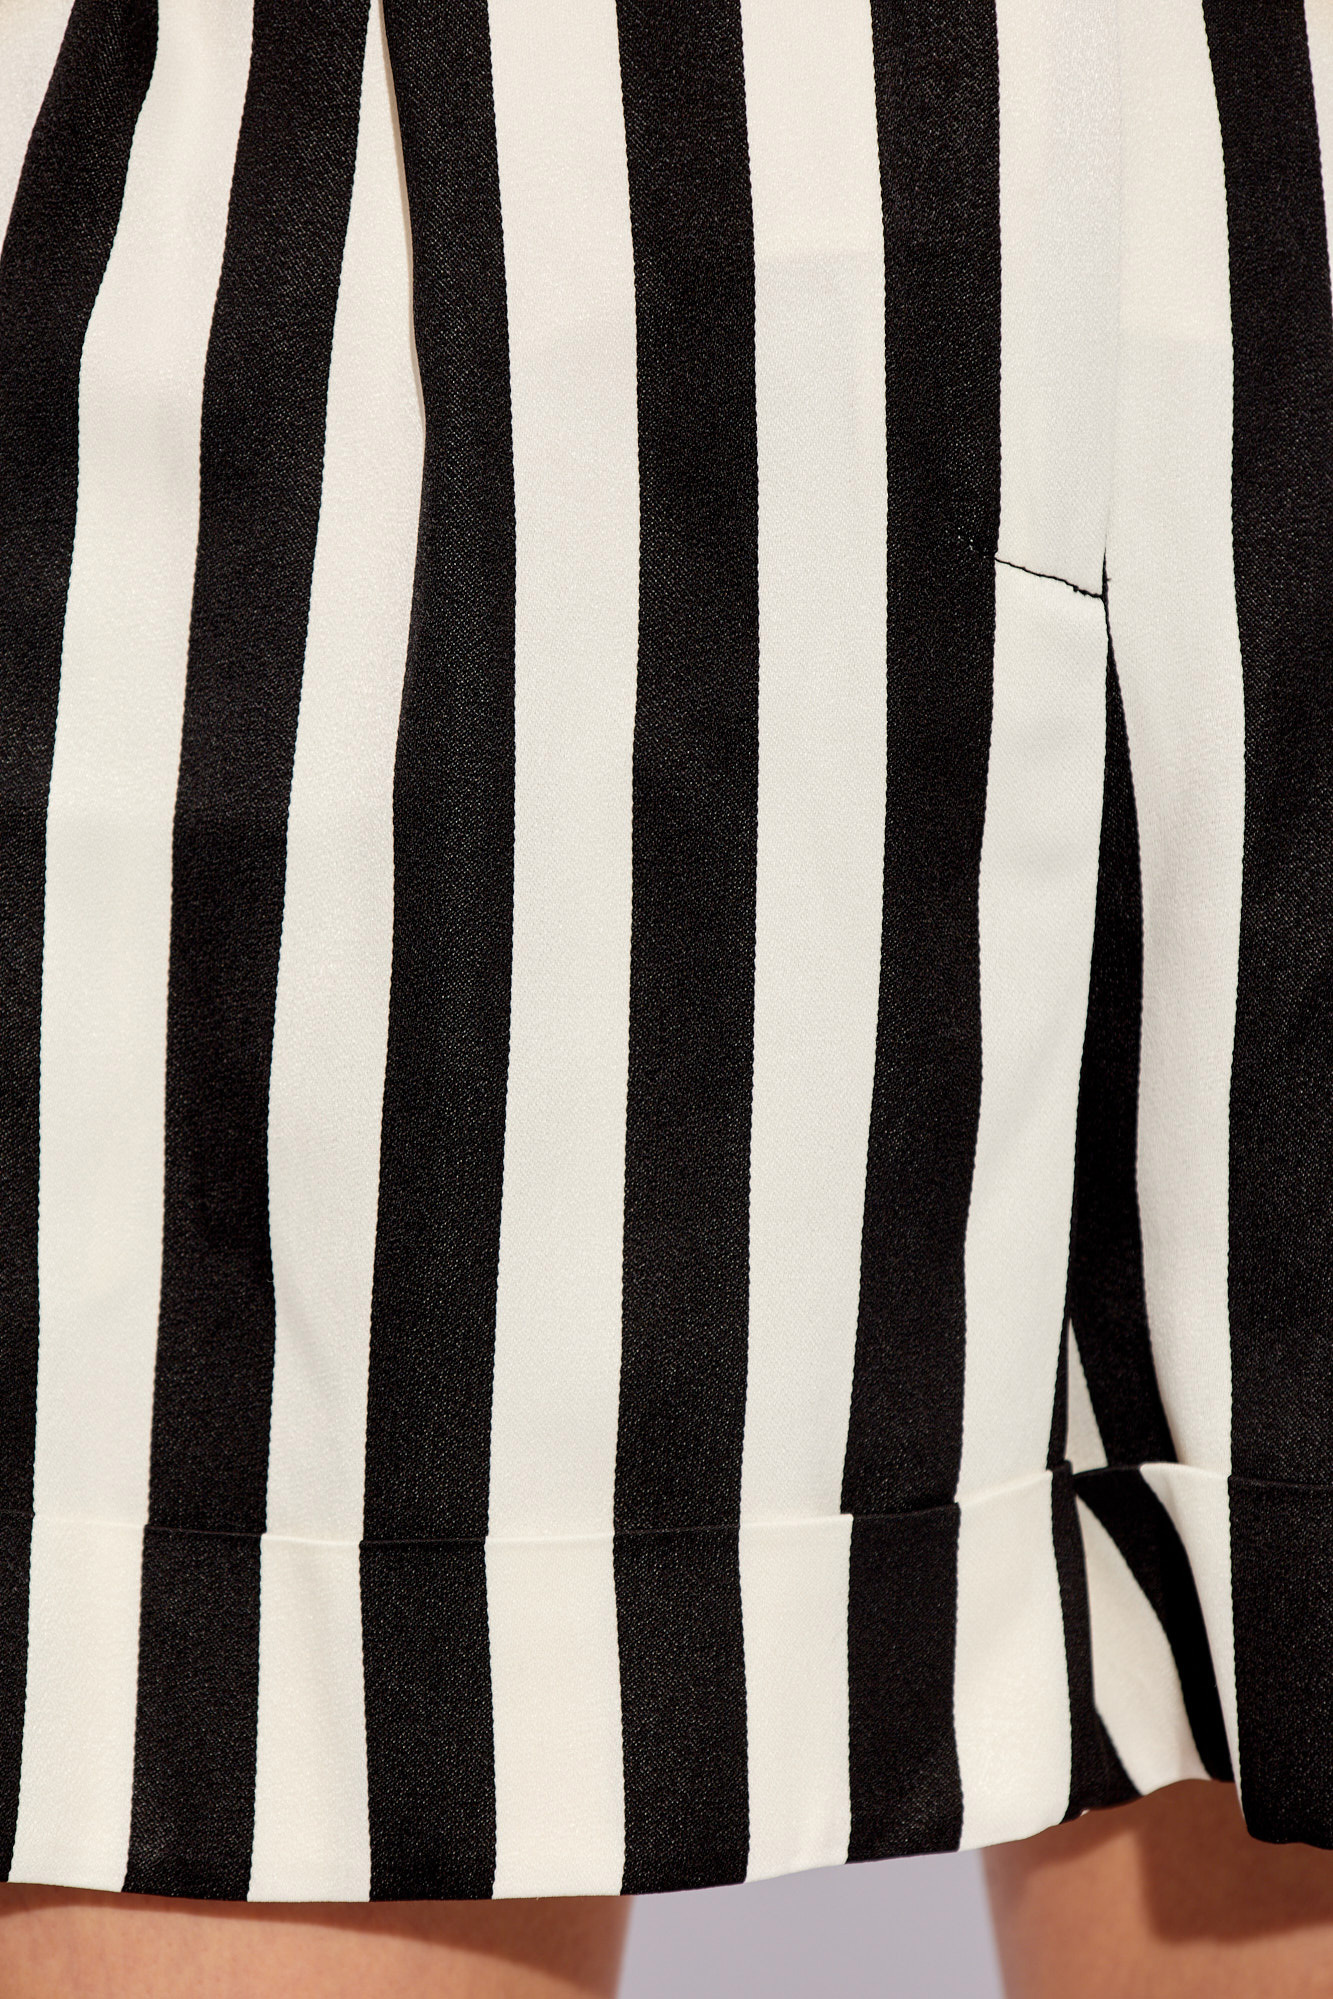 Moschino Striped shorts